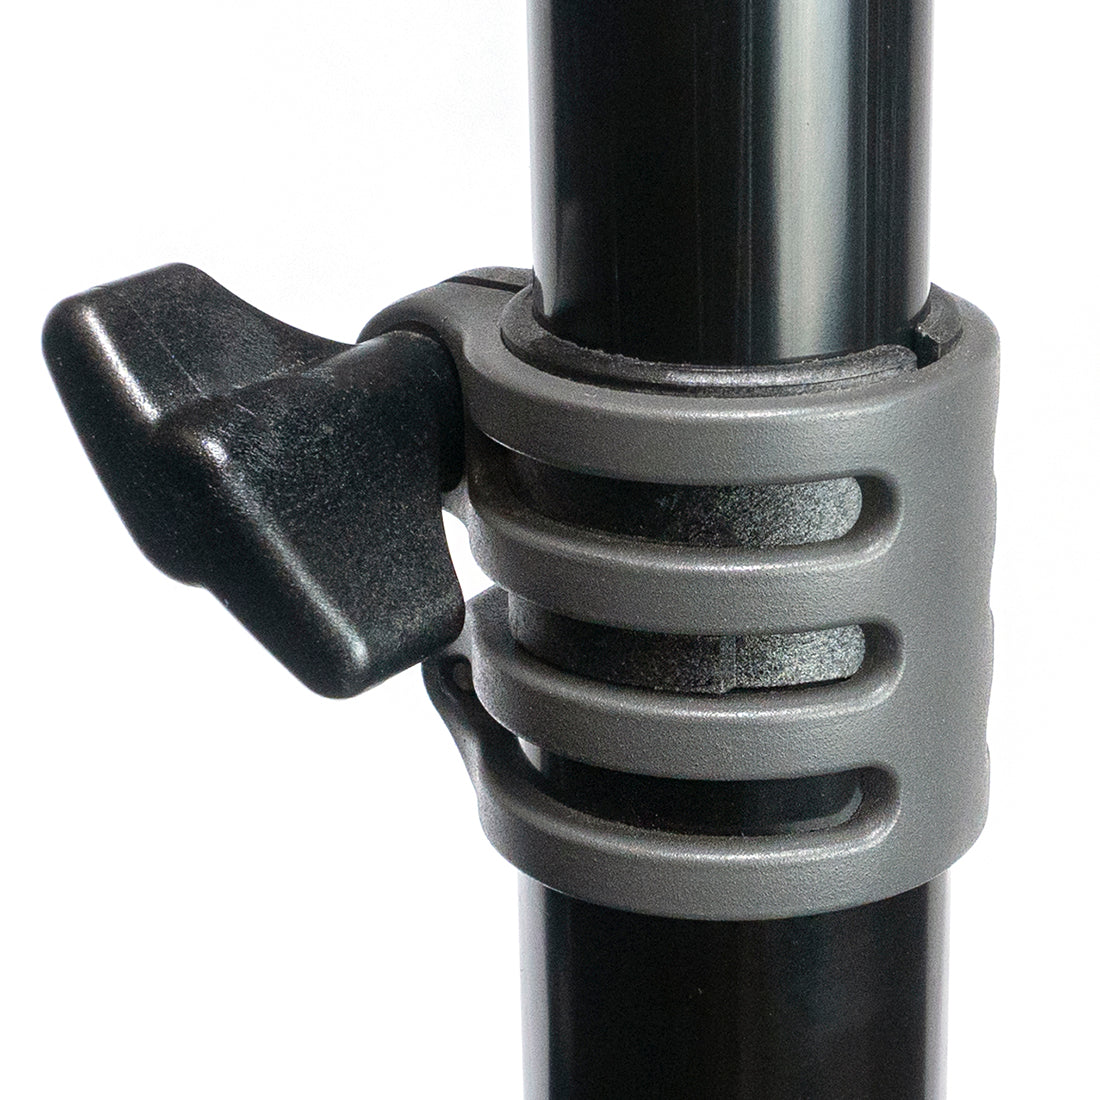 Close up of a bike repair stand telescoping main tube clamp.